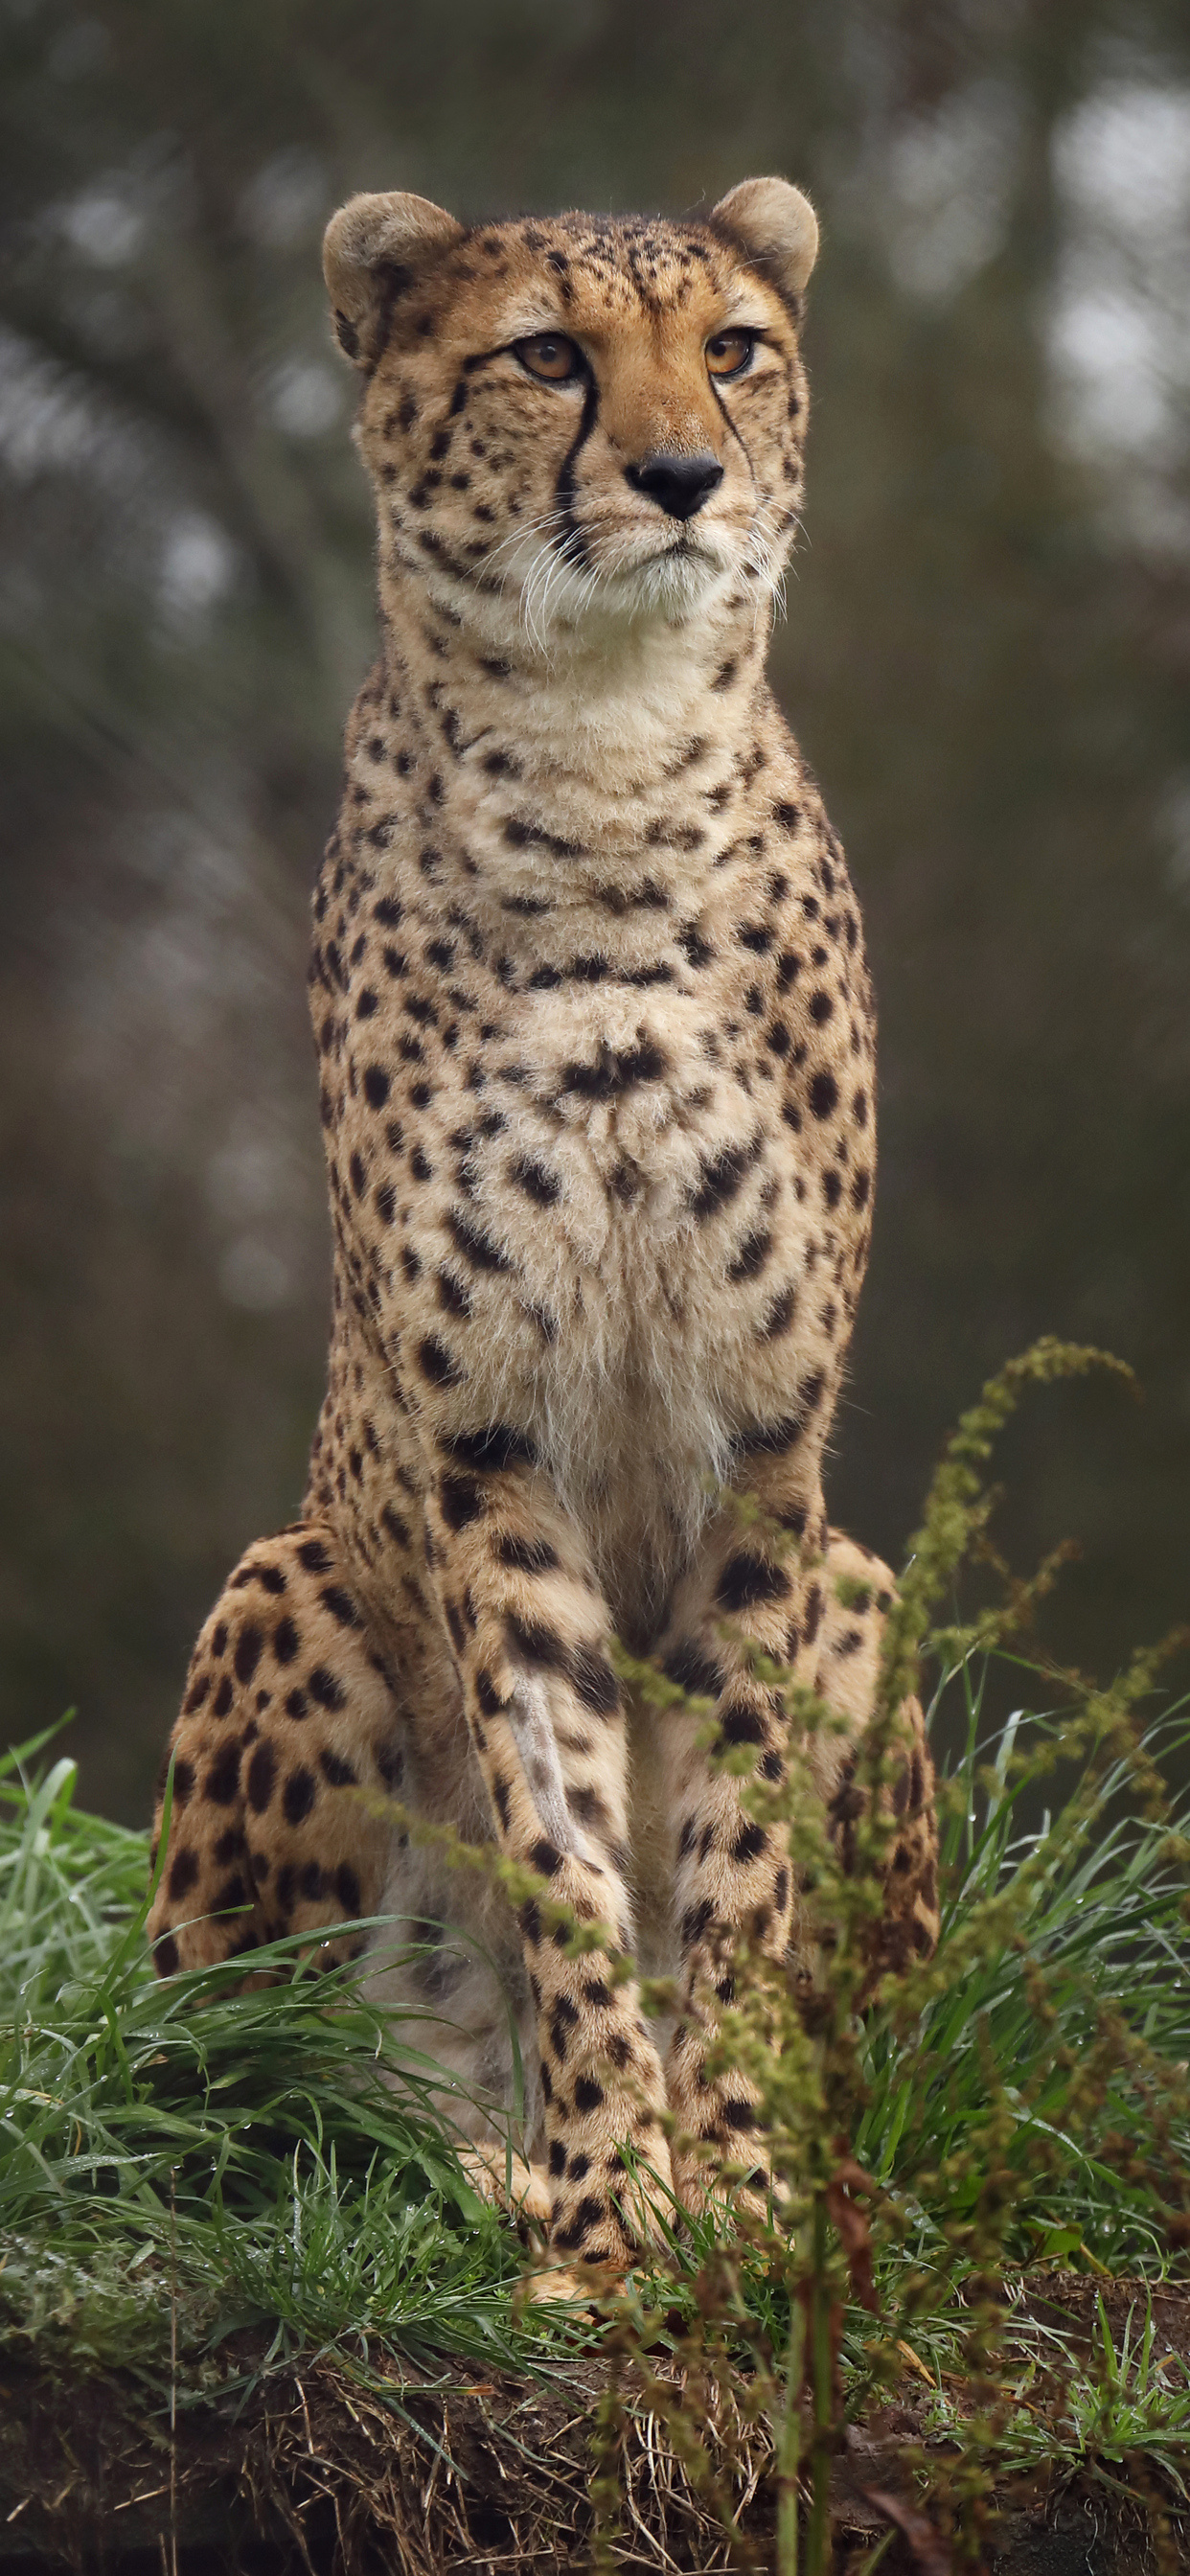 4K cheetah imagery, Wild beauty captured, Striking iPhone XS Max wallpaper, Stunning HD photography, 1250x2690 HD Phone